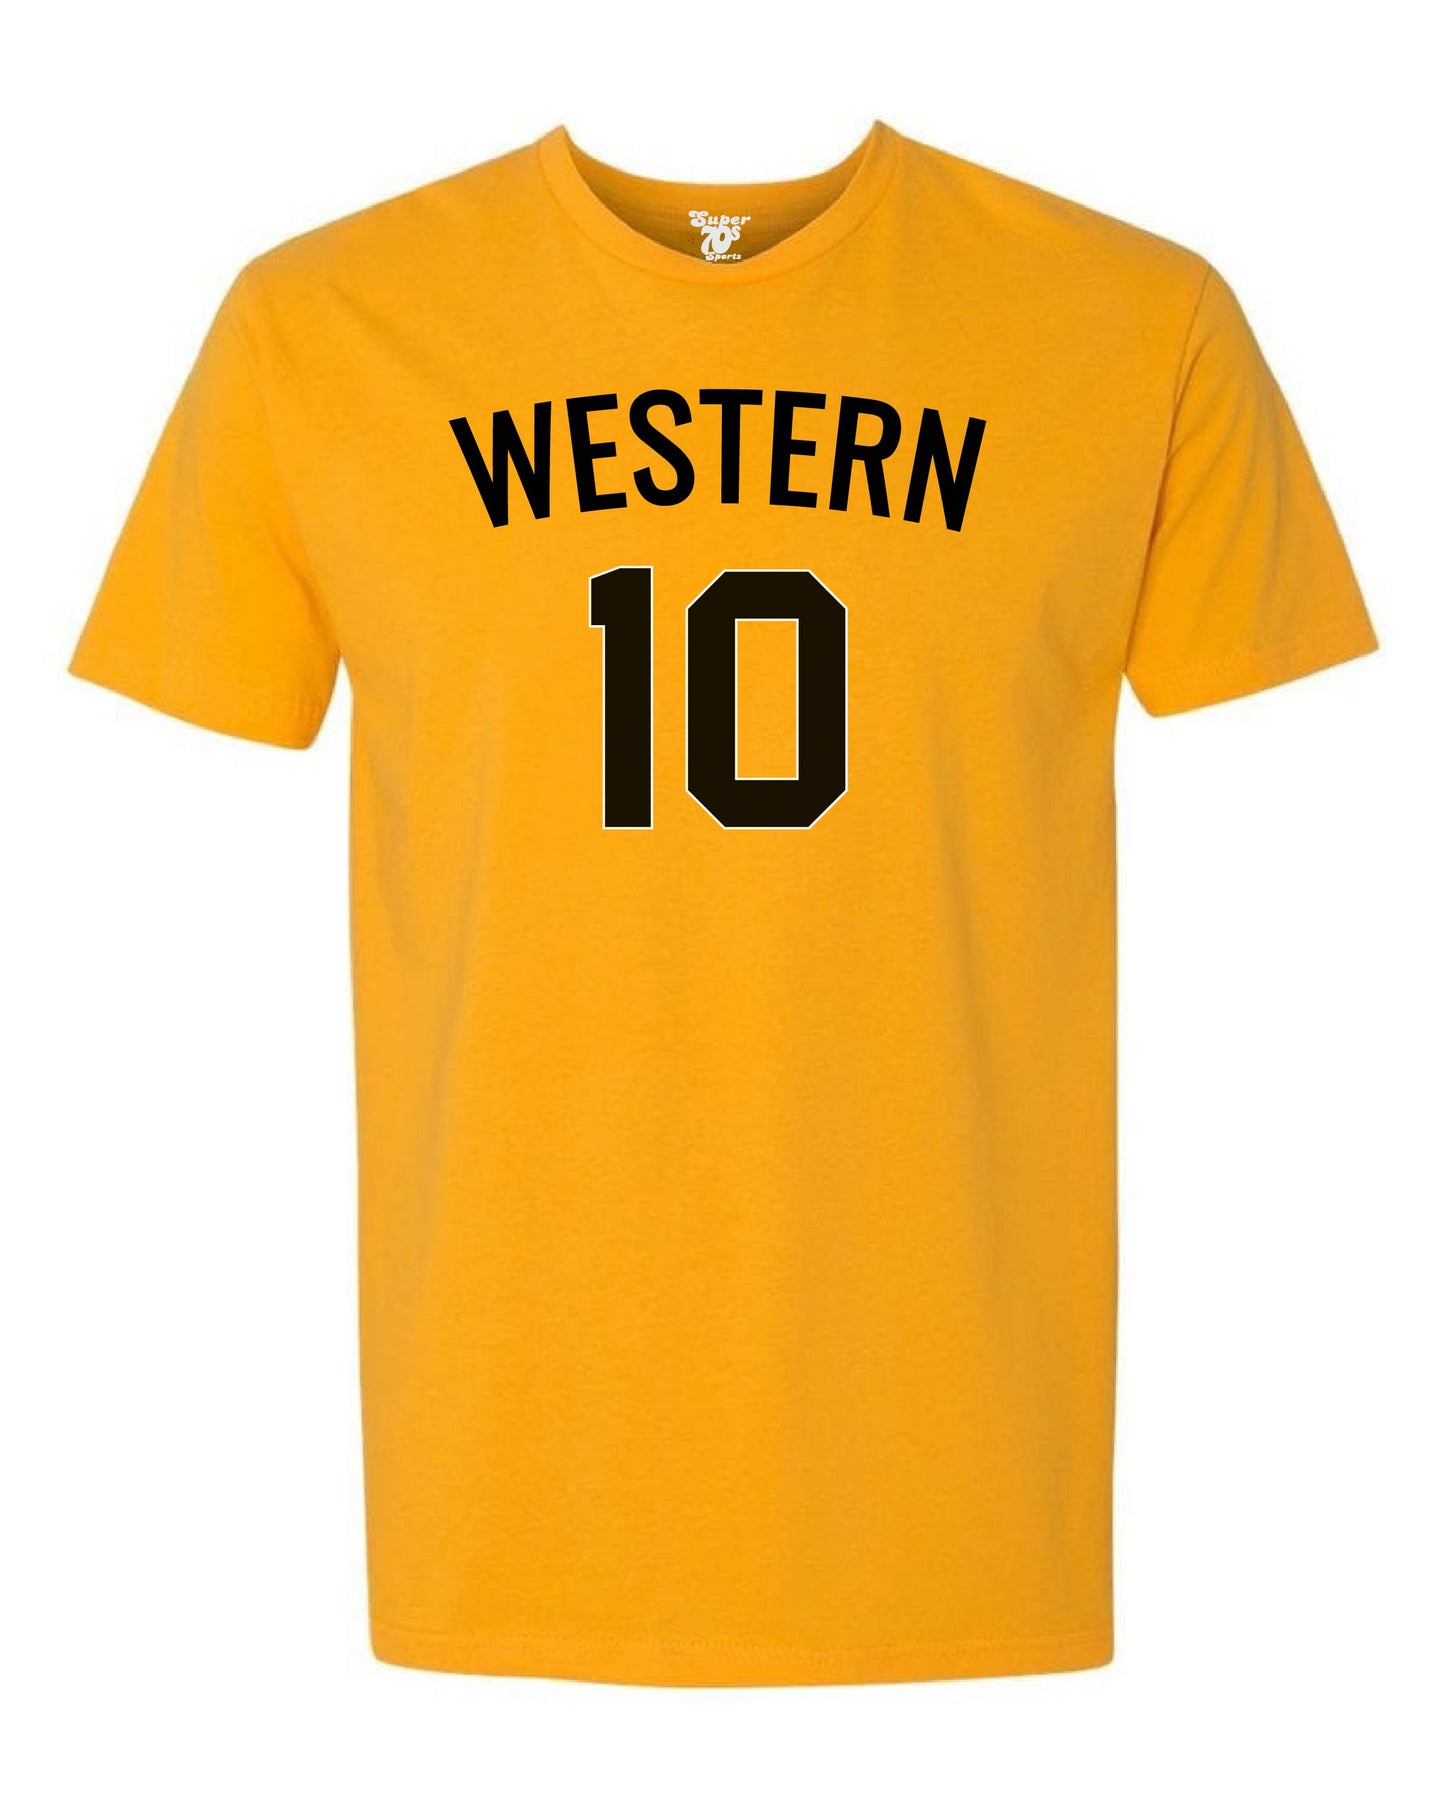 Western 10 Tee